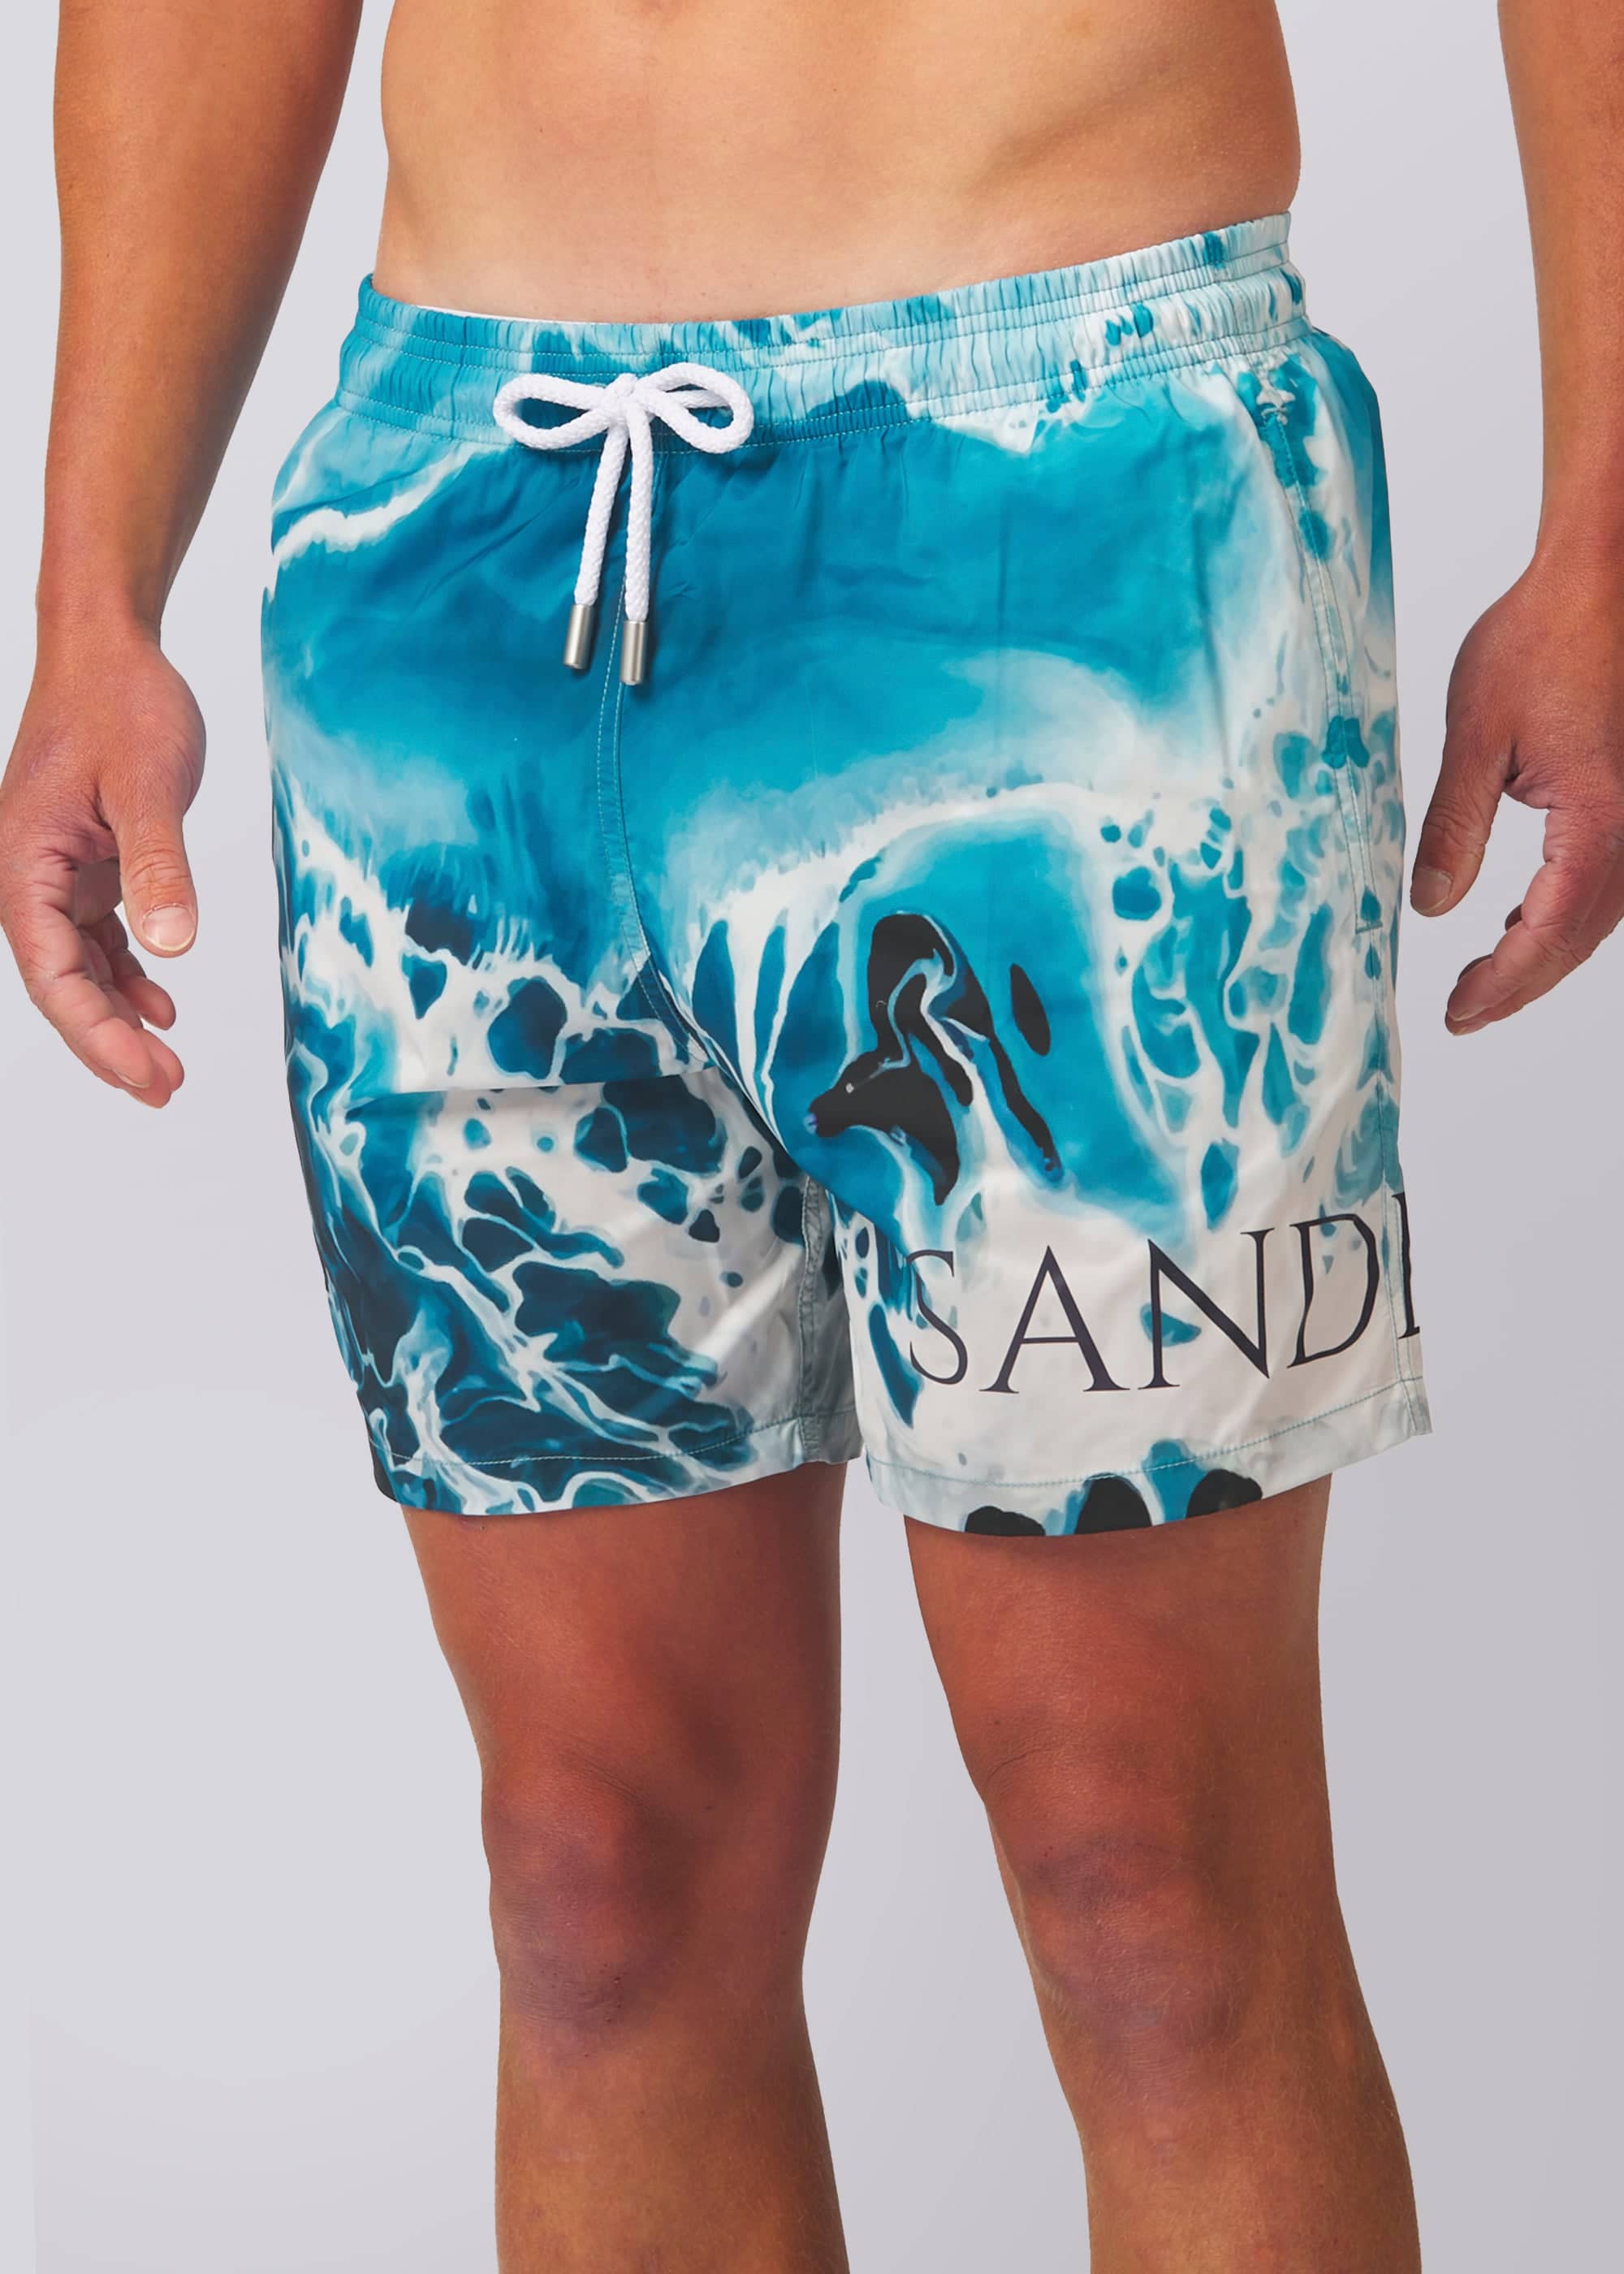 Sandbanks Crashing Waves Swim Shorts - Multi Coloured